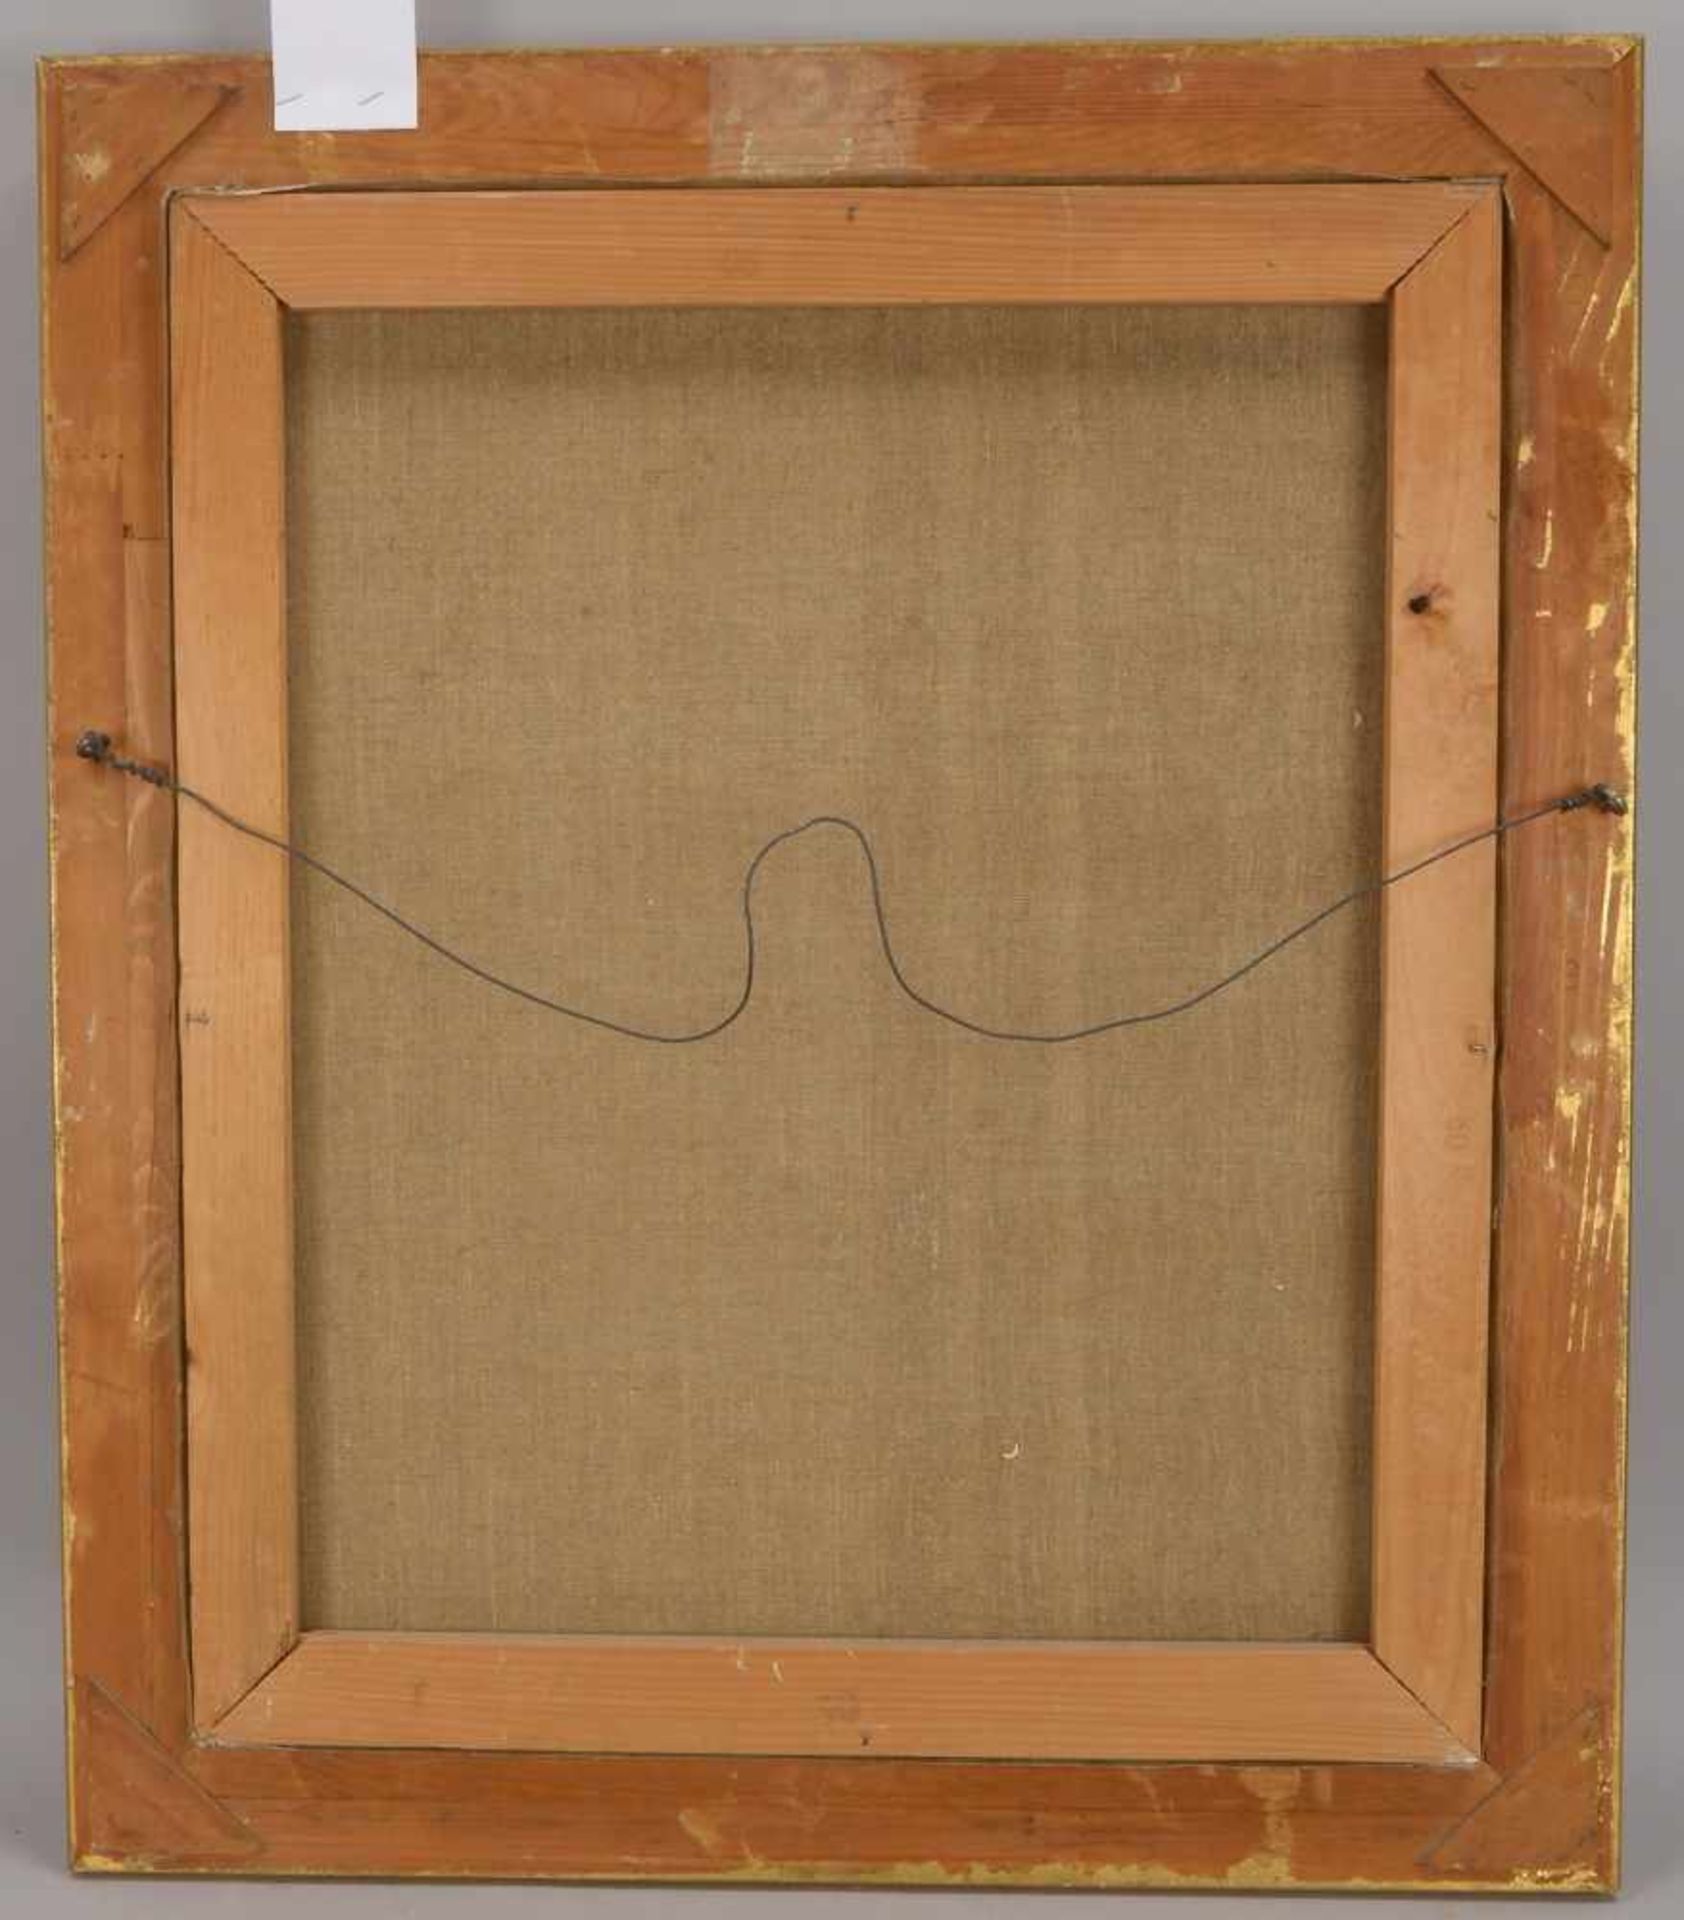 Vizkelety, W. Emery, 'Marktszene', Öl/Lw, unten rechts signiert; Bildmaße 60 x 50 cm, Rahmenmaße - Bild 3 aus 3